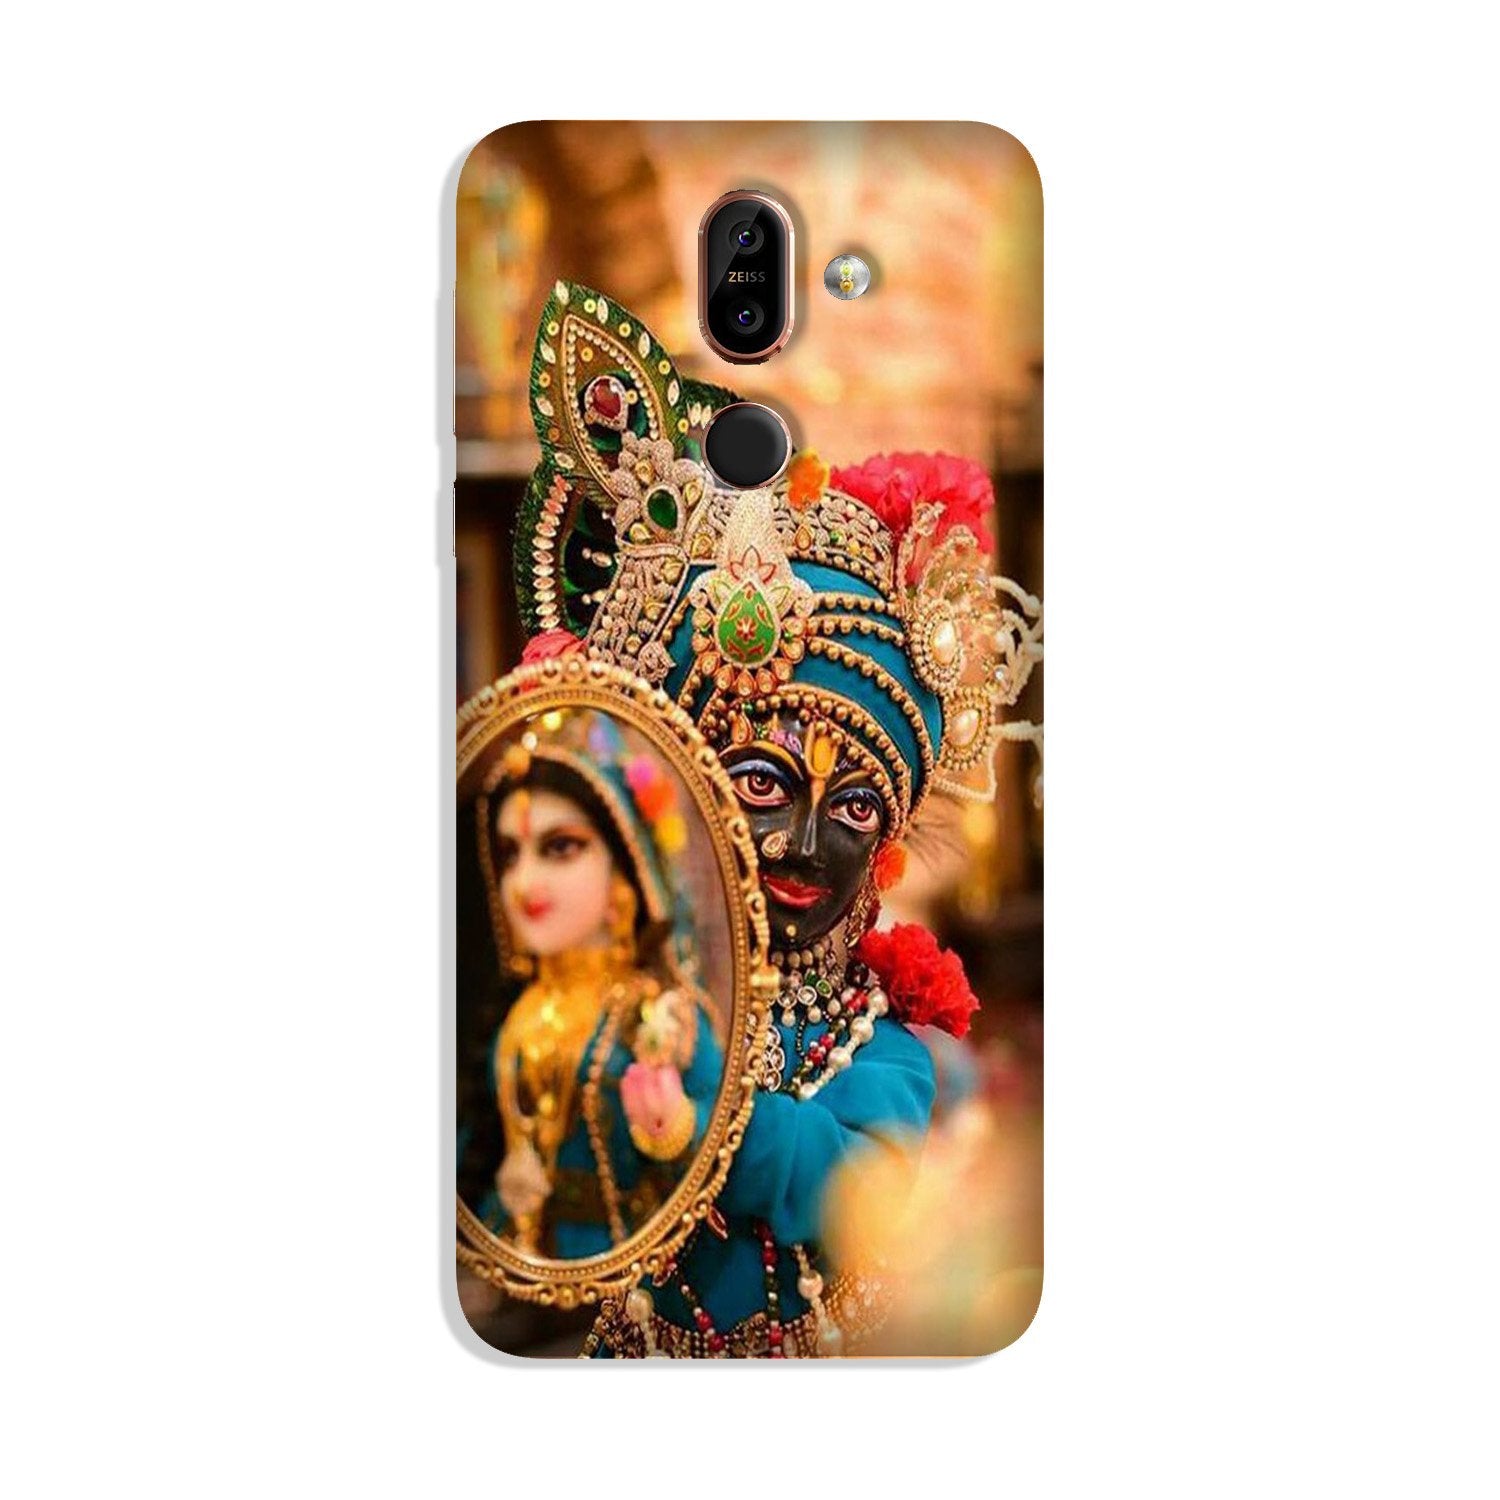 Lord Krishna5 Case for Nokia 8.1